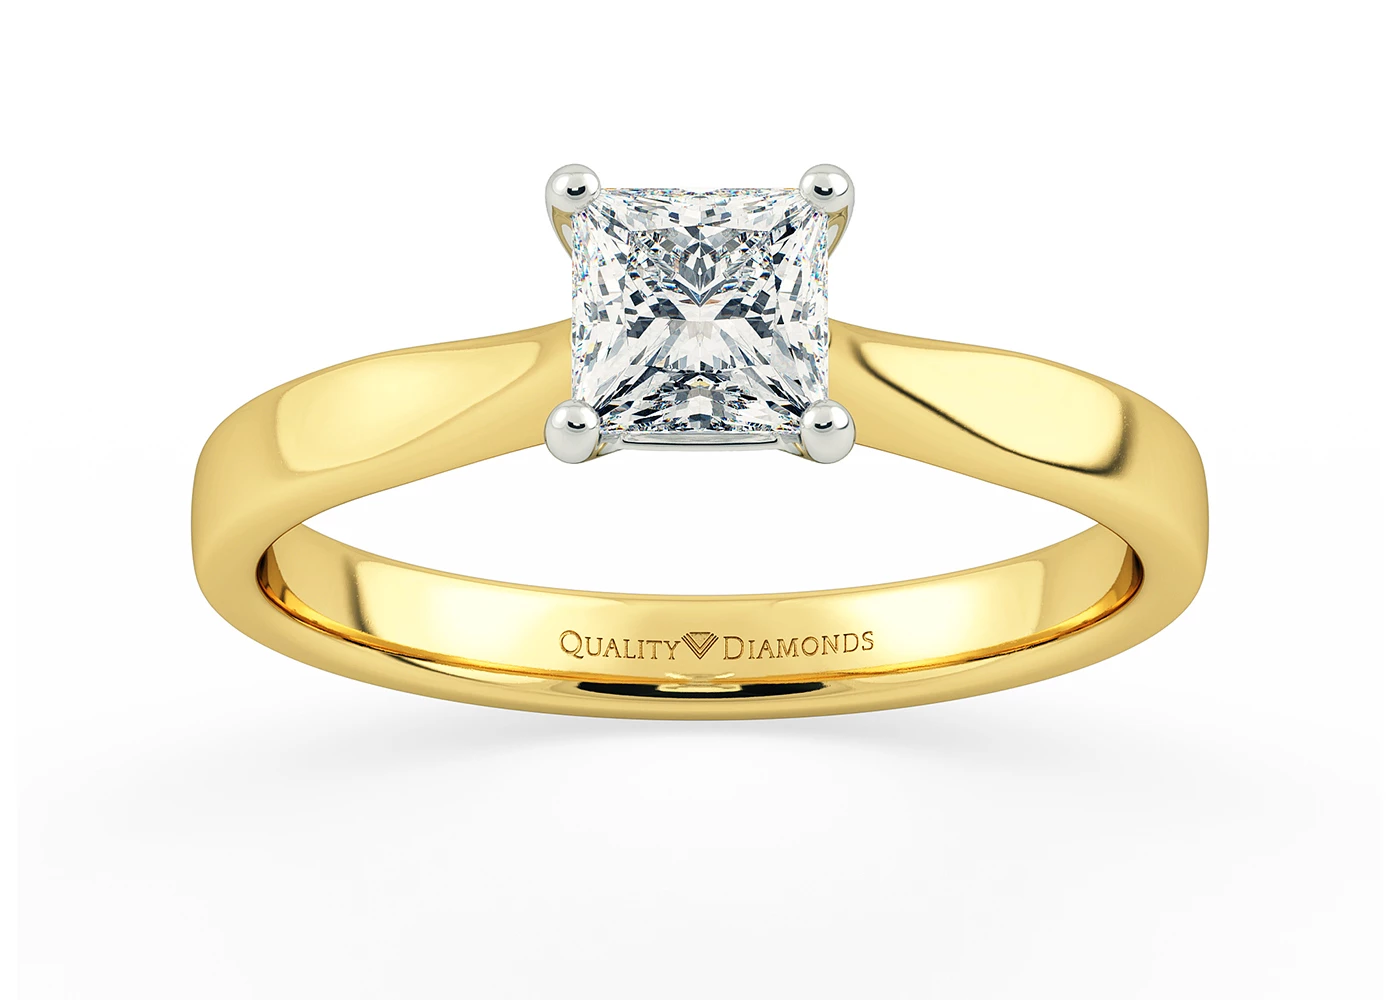 Princess Beau Diamond Ring in 18K Yellow Gold